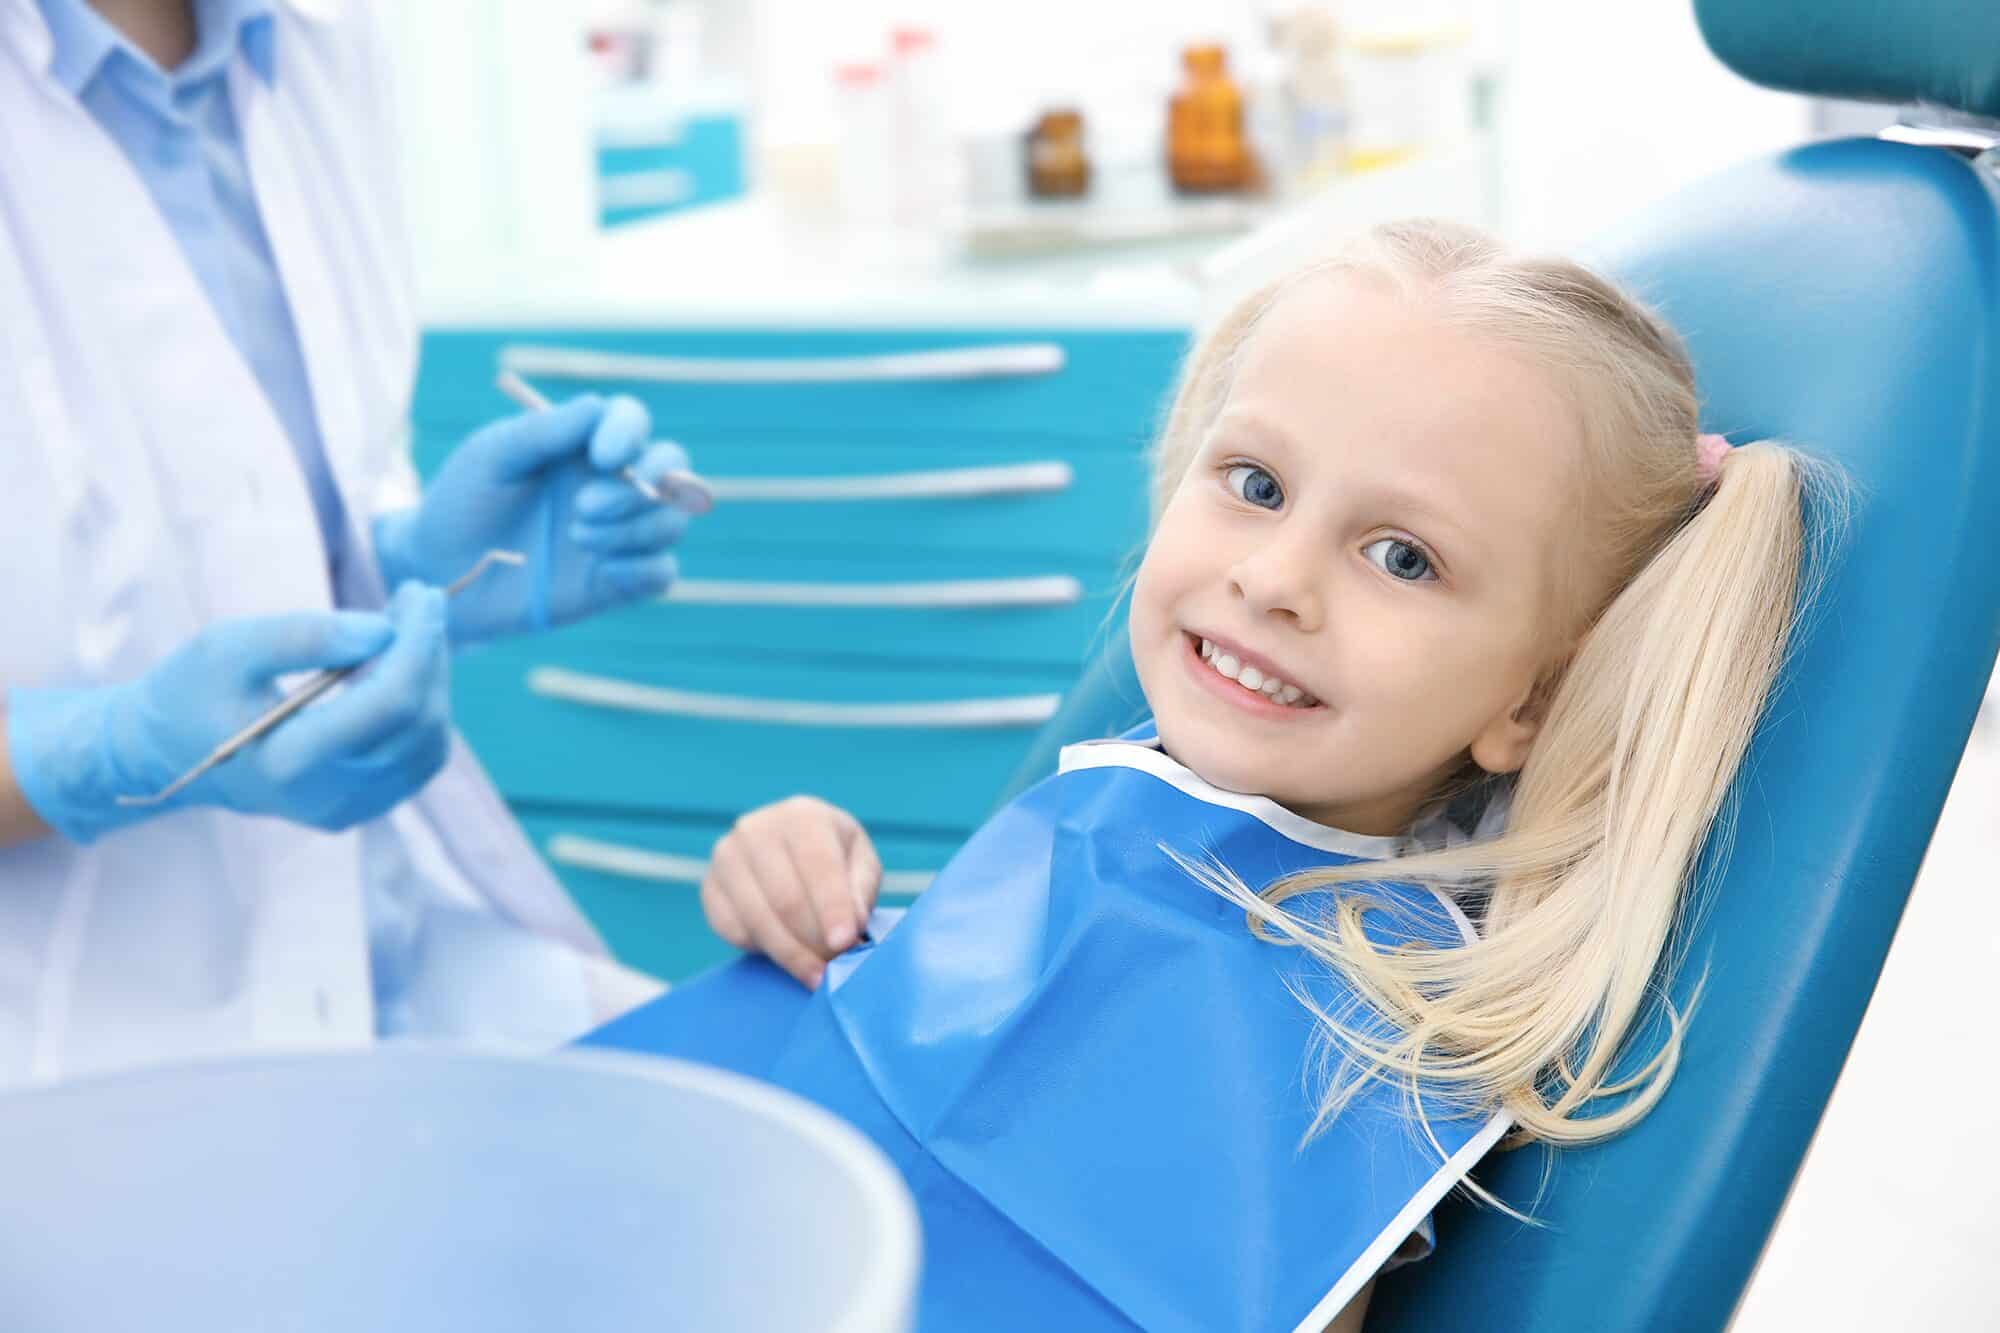 childrens dentistry kids dentist Dr. Justin Nylander. Allen Dentistry. General, Cosmetic, Restorative, Preventative Dentistry. Dentist in Allen, TX 75013